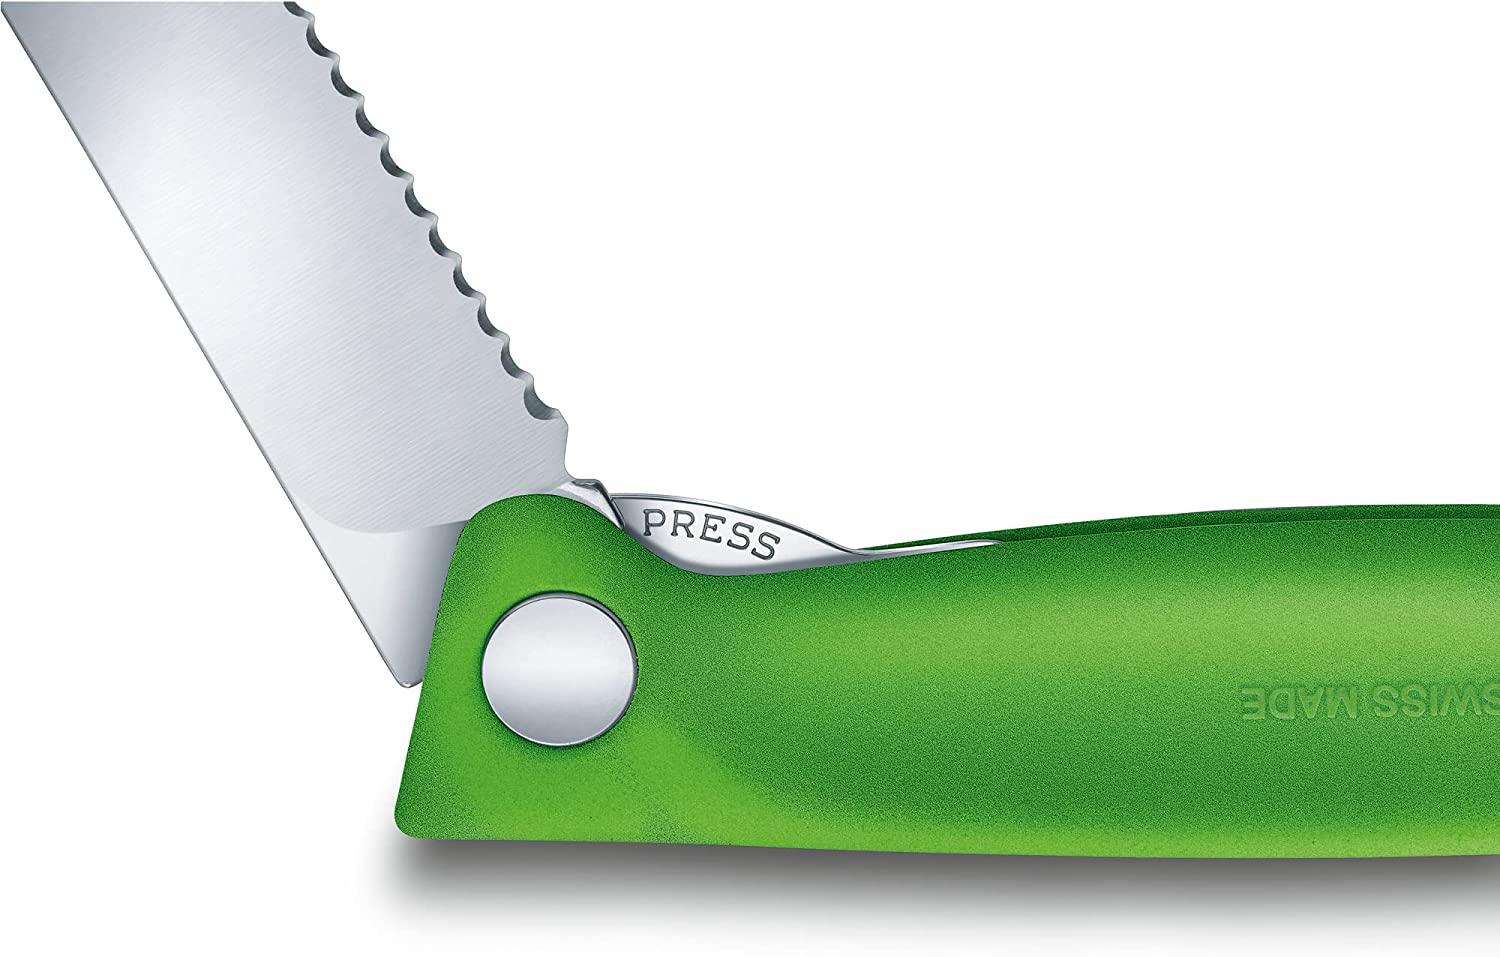 Victorinox Swiss Classic 4.3 Inch Foldable Paring Knife Straight